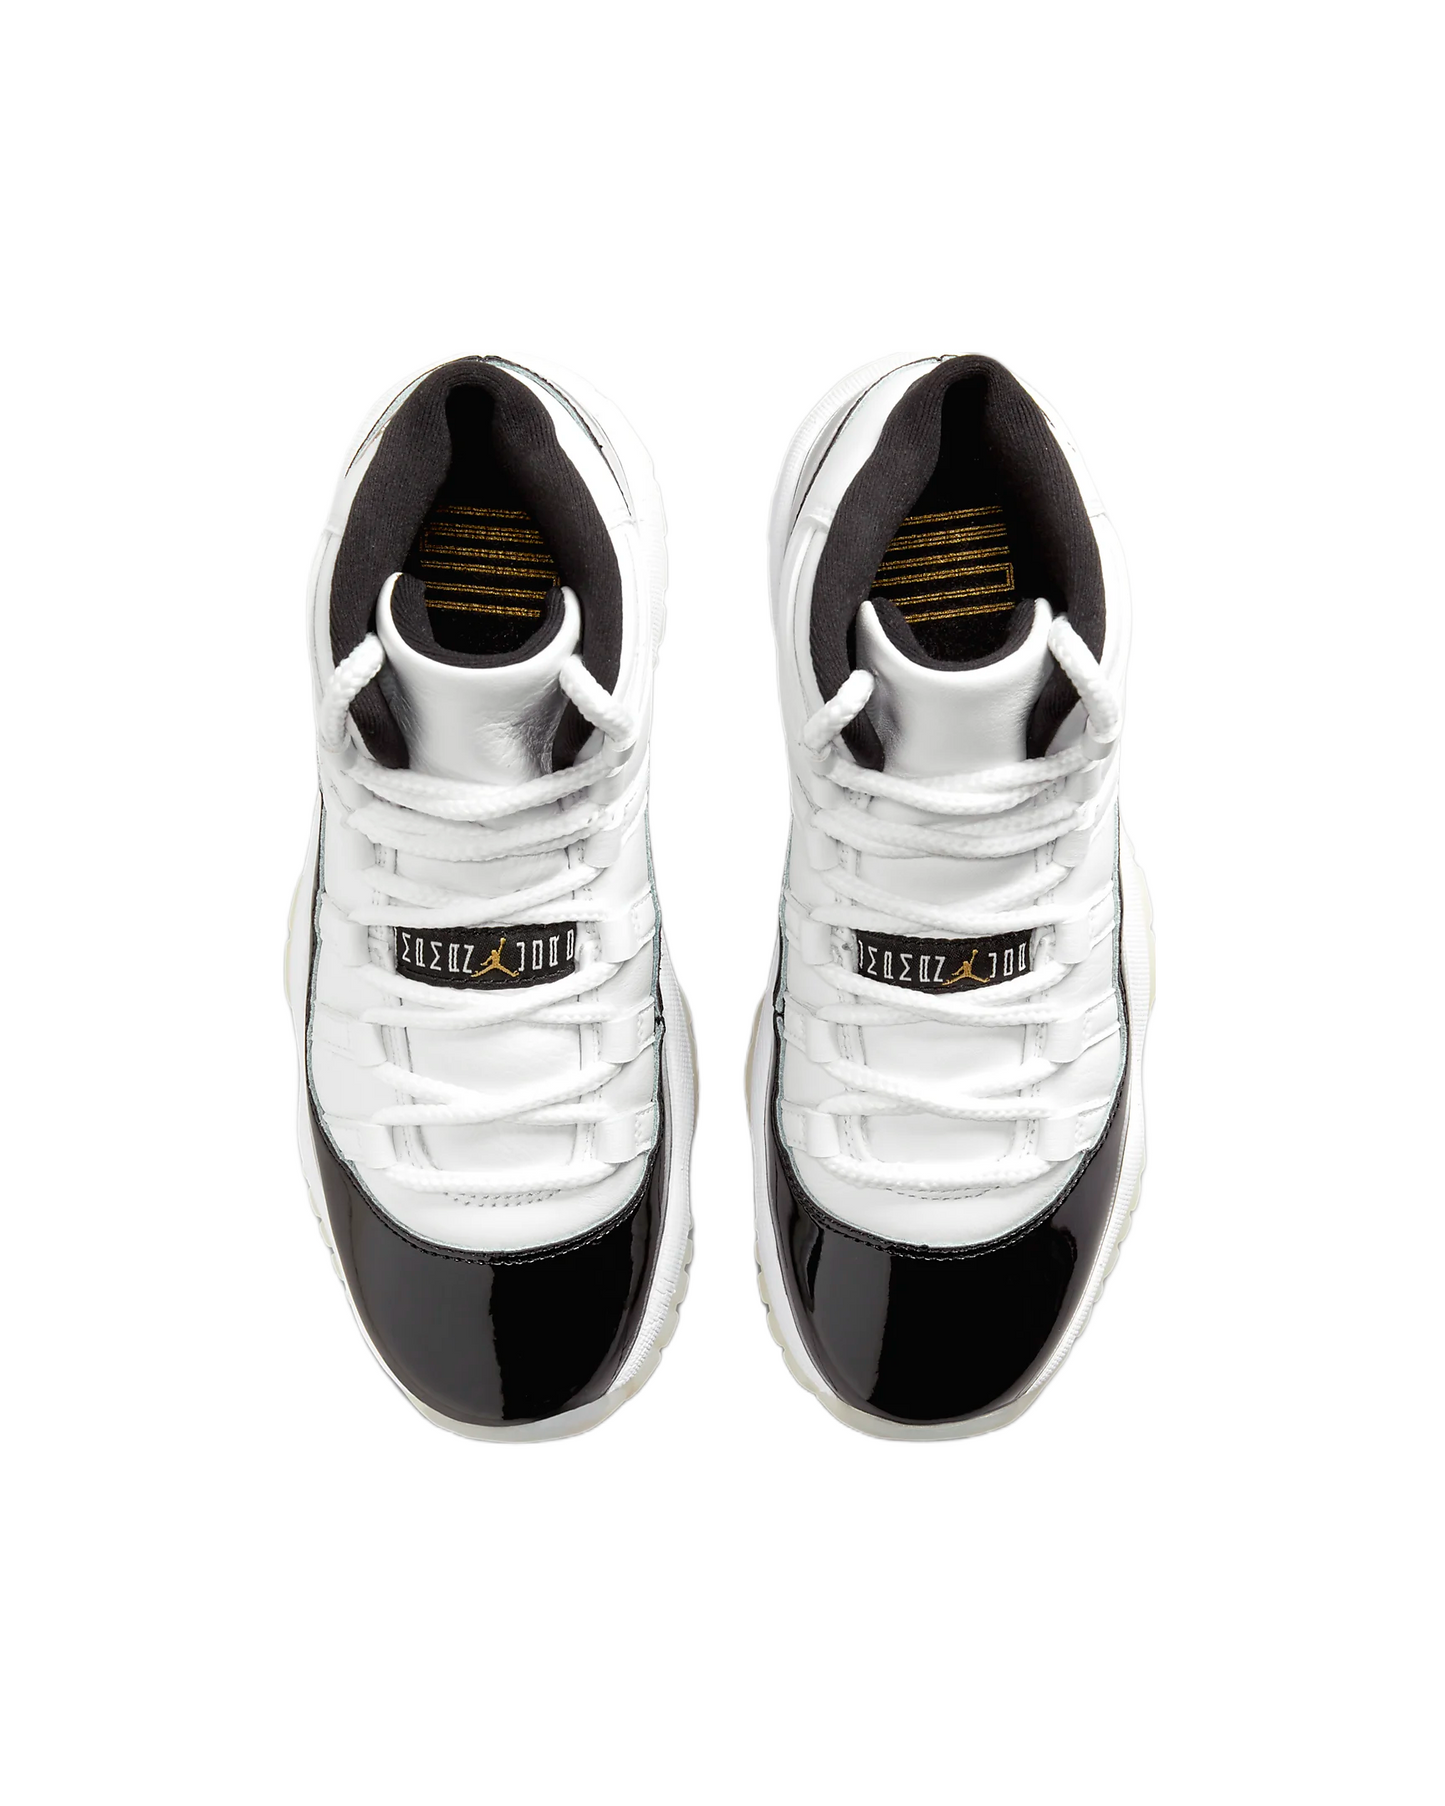 Air Jordan 11 Retro Grade School Sneaker White / Metallic Gold-Black 378038-170